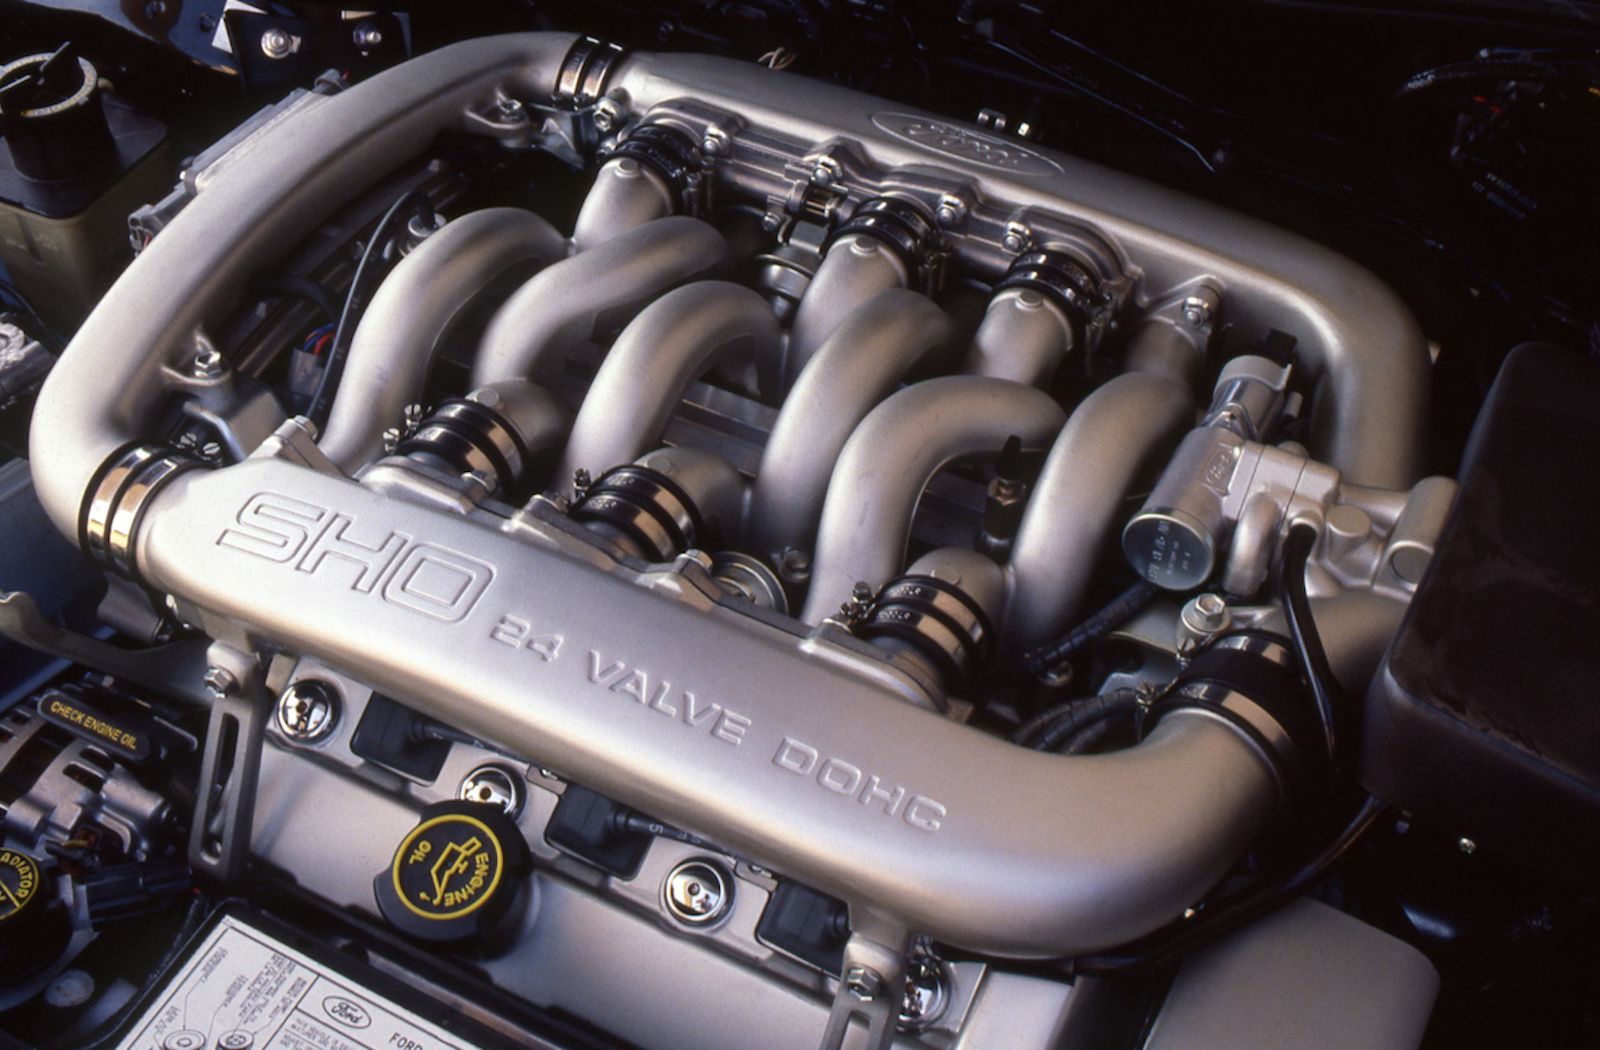 Ford SHO V8 engine - Wikipedia